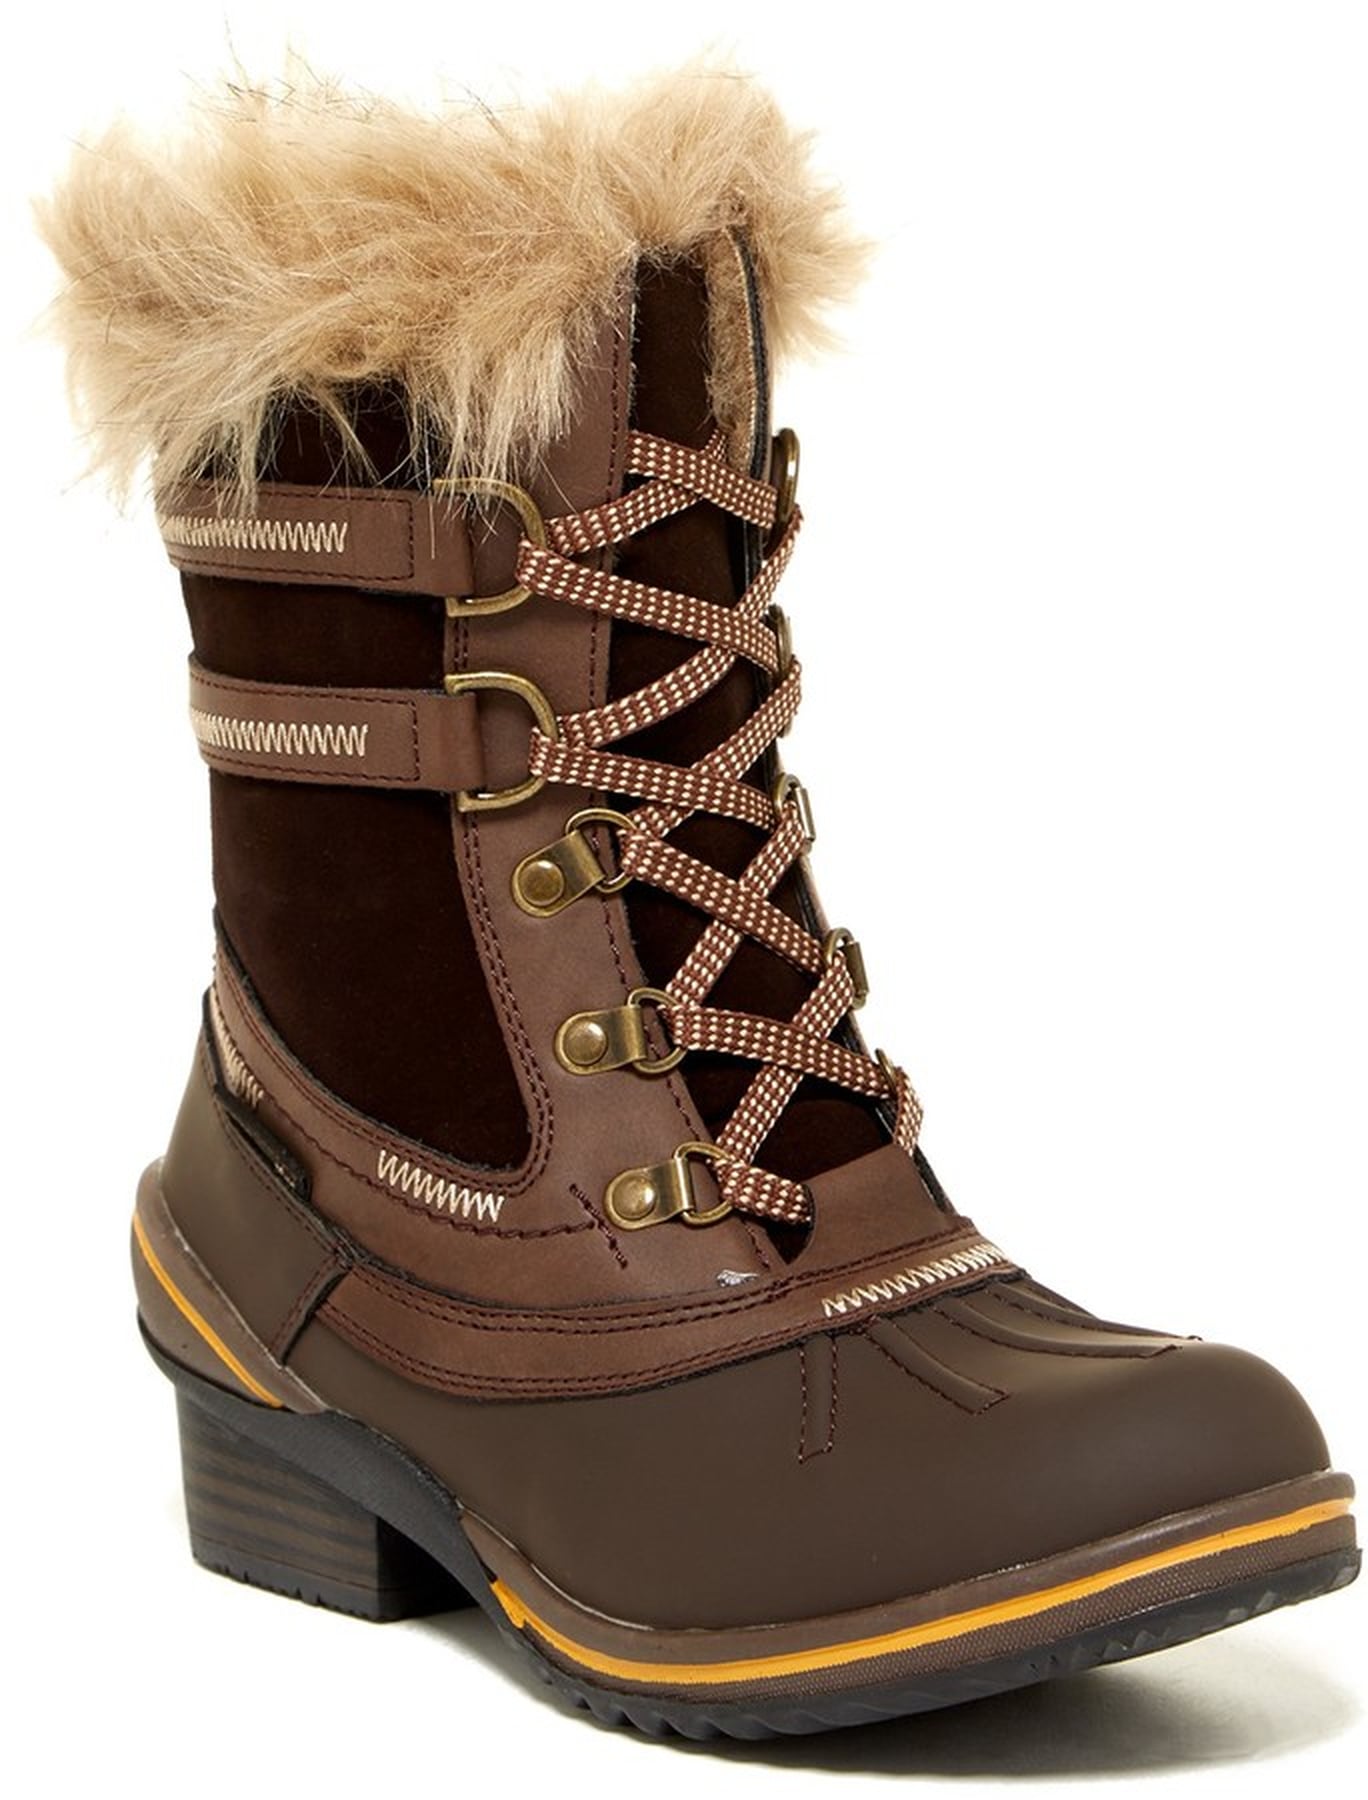 Meghan Markle Winter Boots | POPSUGAR Fashion